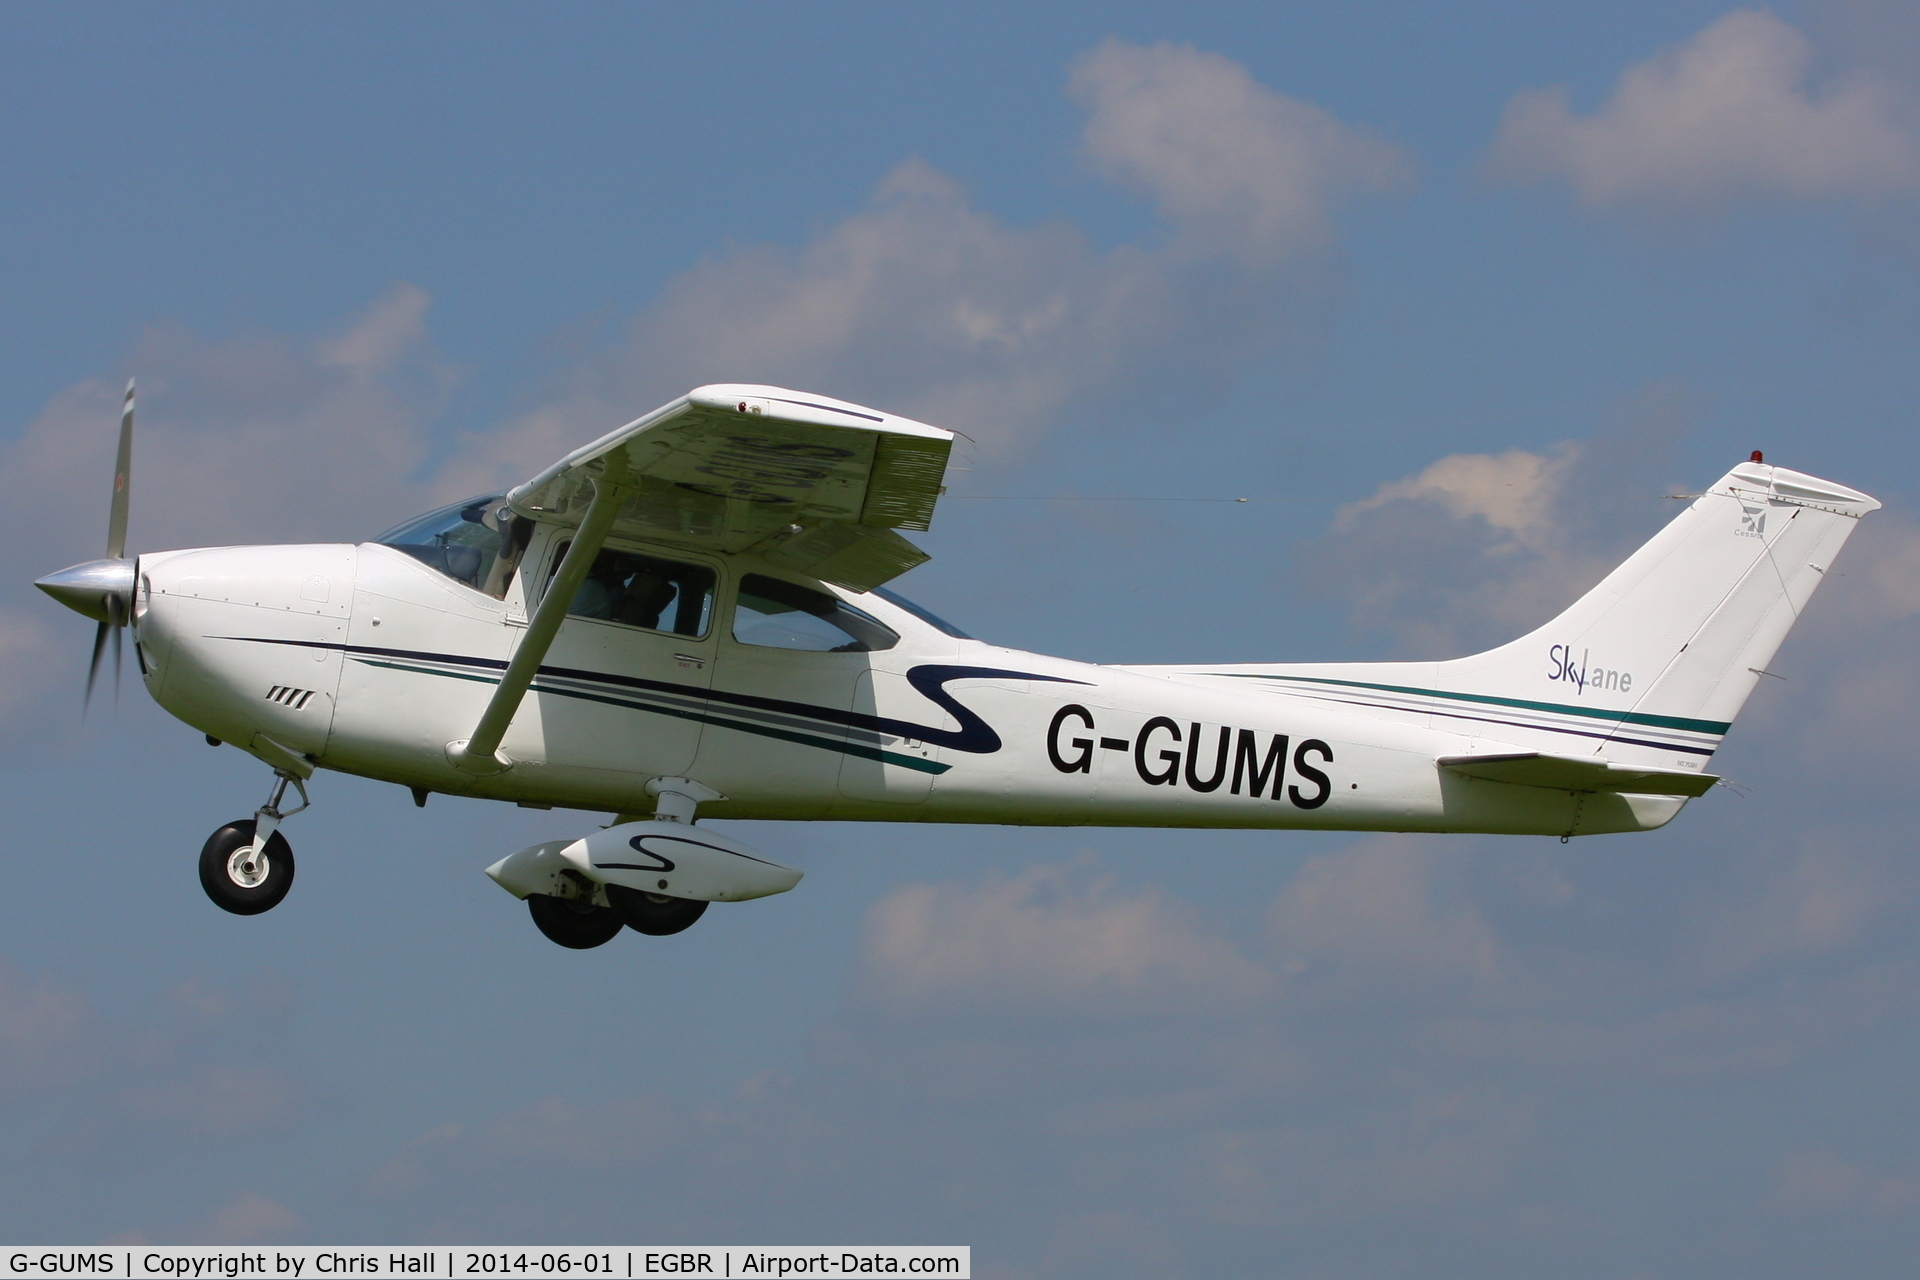 G-GUMS, 1973 Cessna 182P Skylane C/N 182-61643, at Breighton's Open Cockpit & Biplane Fly-in, 2014